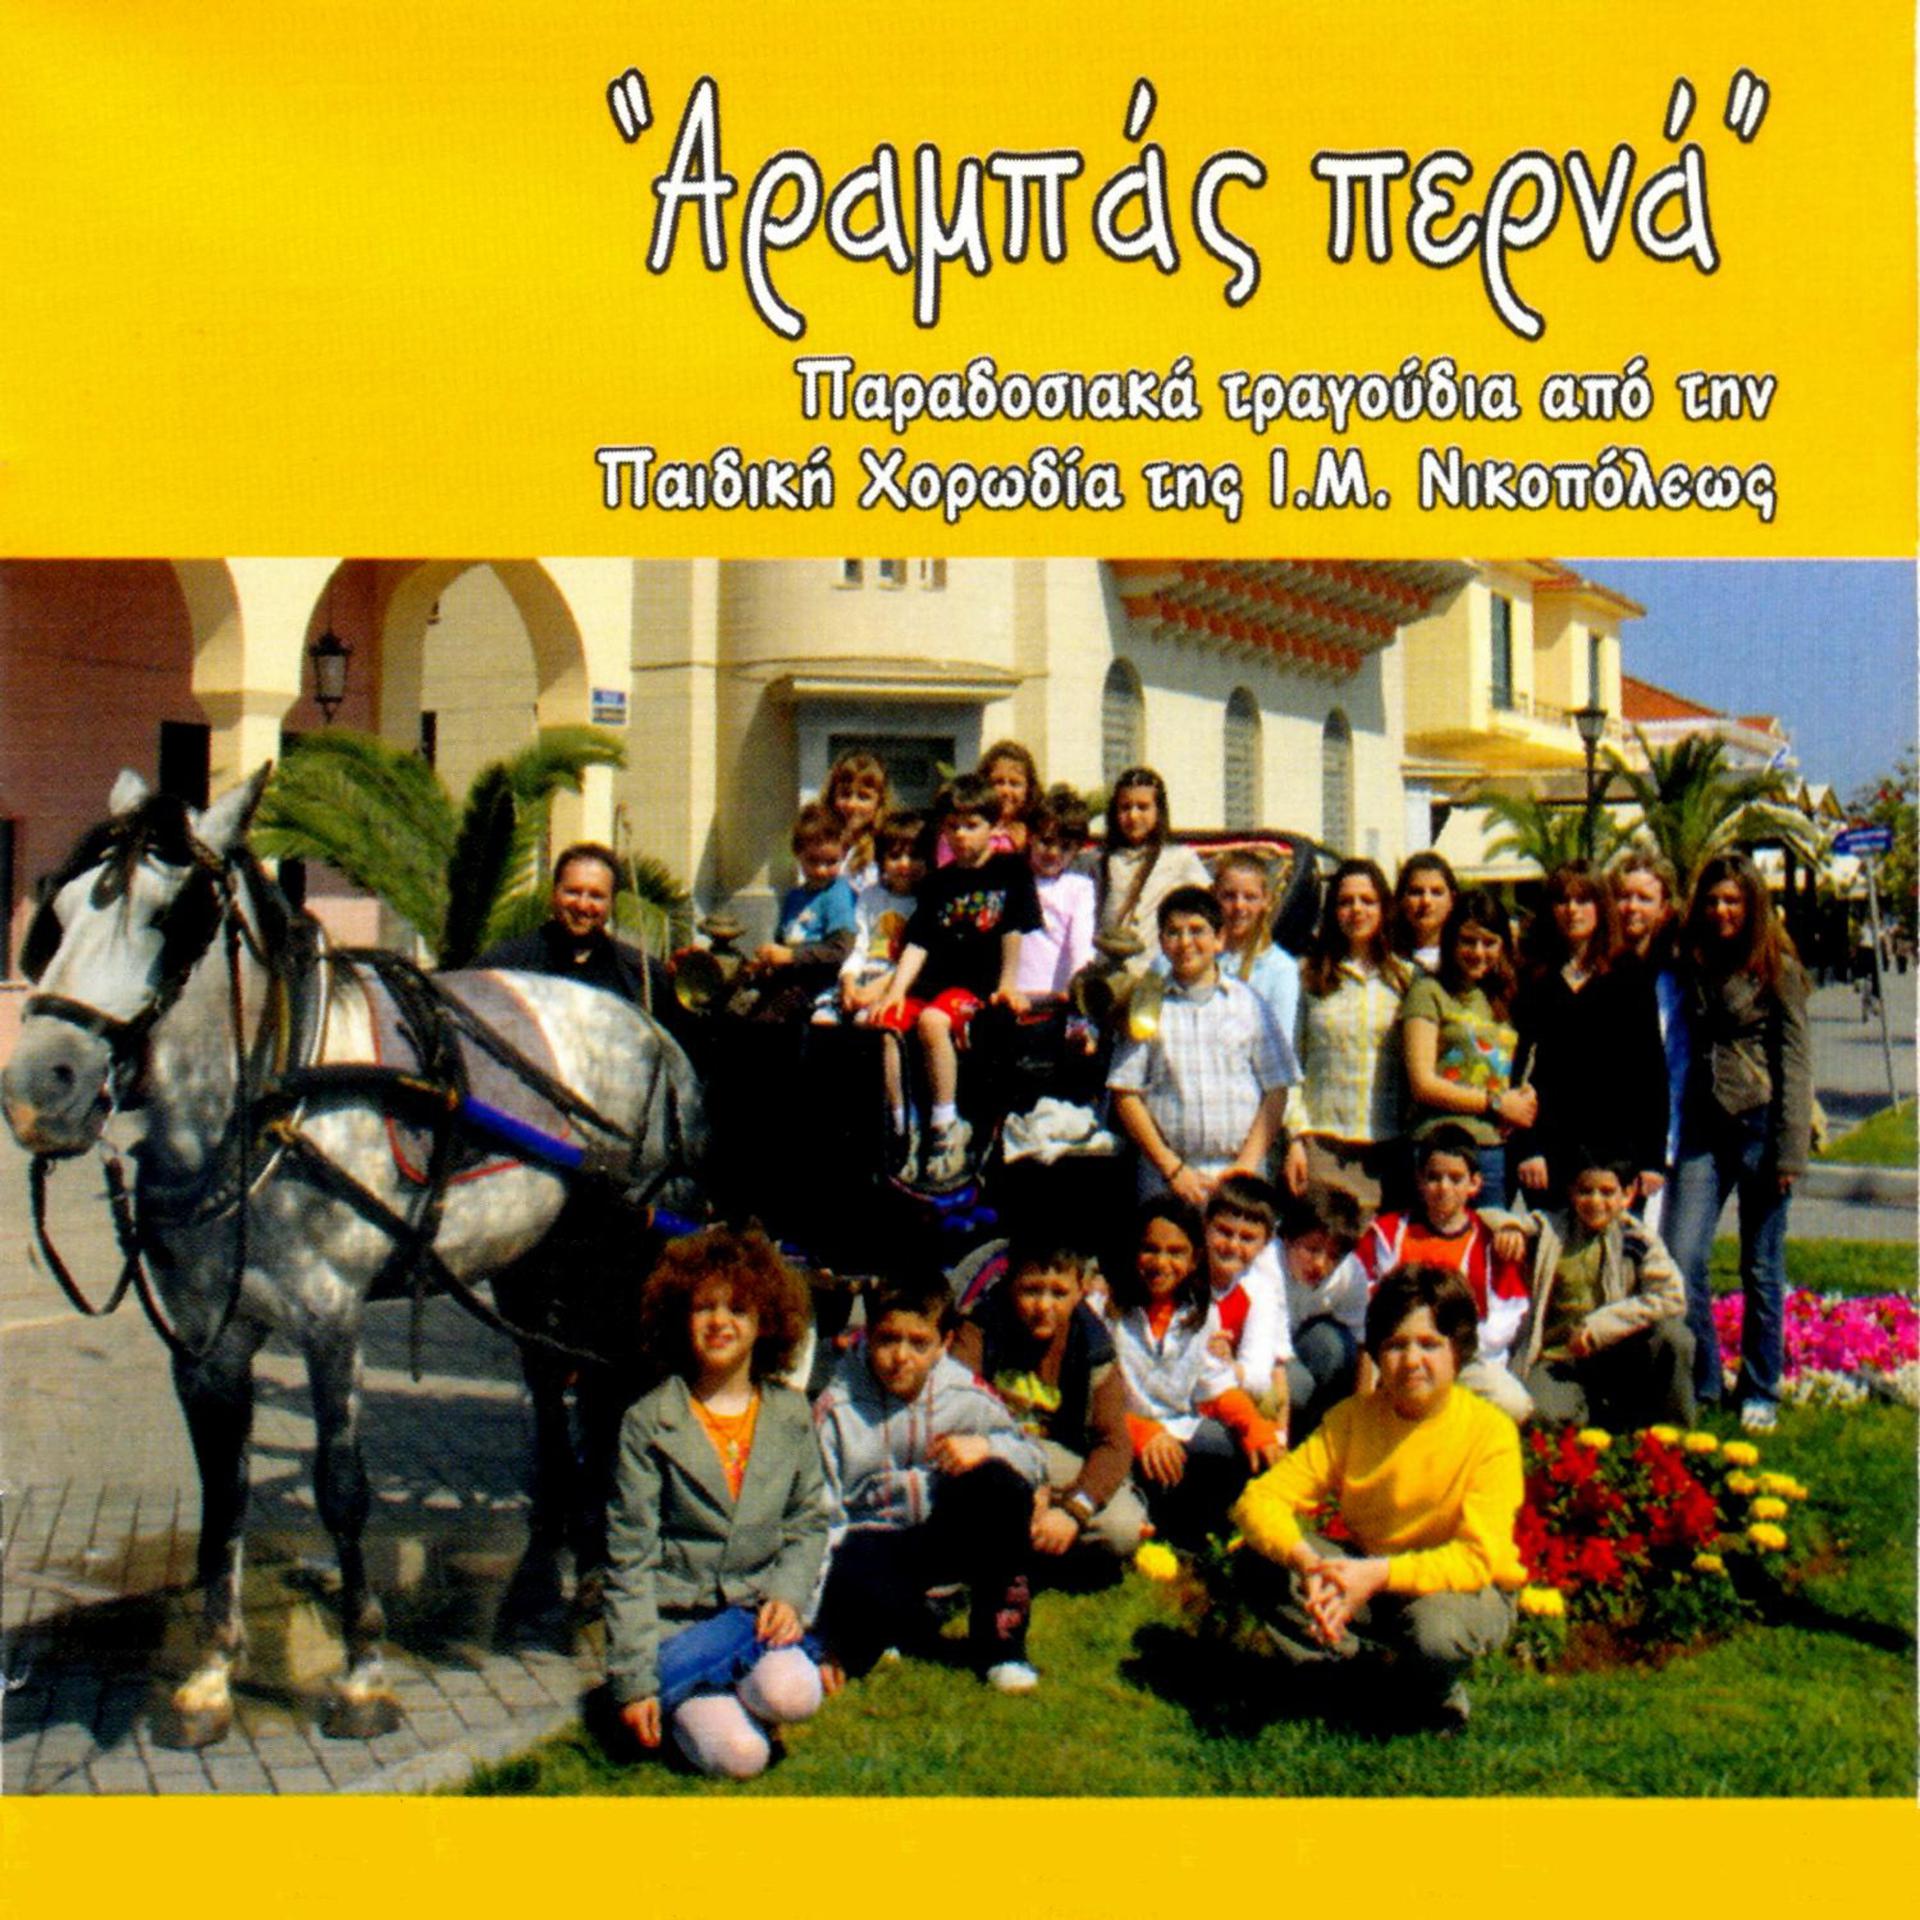 Постер к треку Thodoris Georgopoulos, Mihalis Zampas, Children's Chorus - Arabas perna, Asia minor